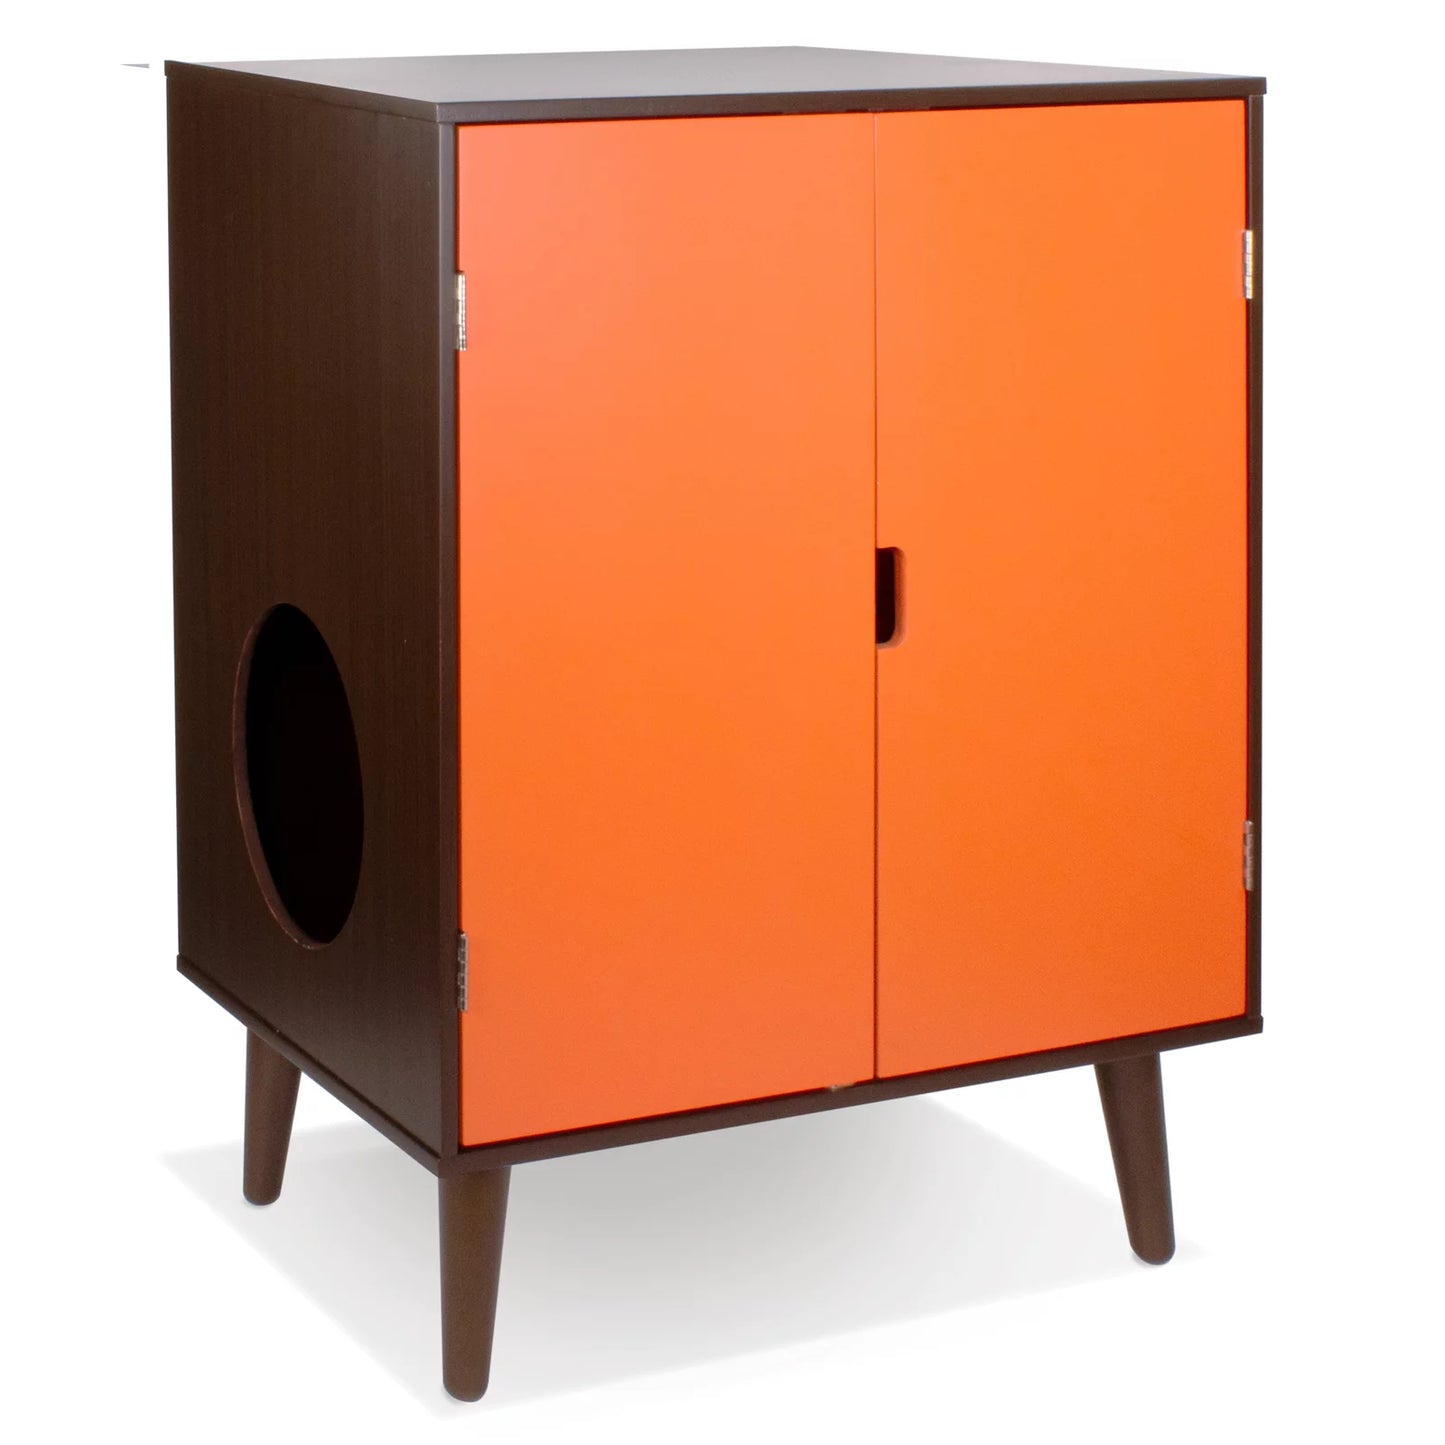 Penn-Plax Cat Walk Furniture: Contemporary Home Cat Litter Hide-Away Cabinet – Espresso with Orange Doors